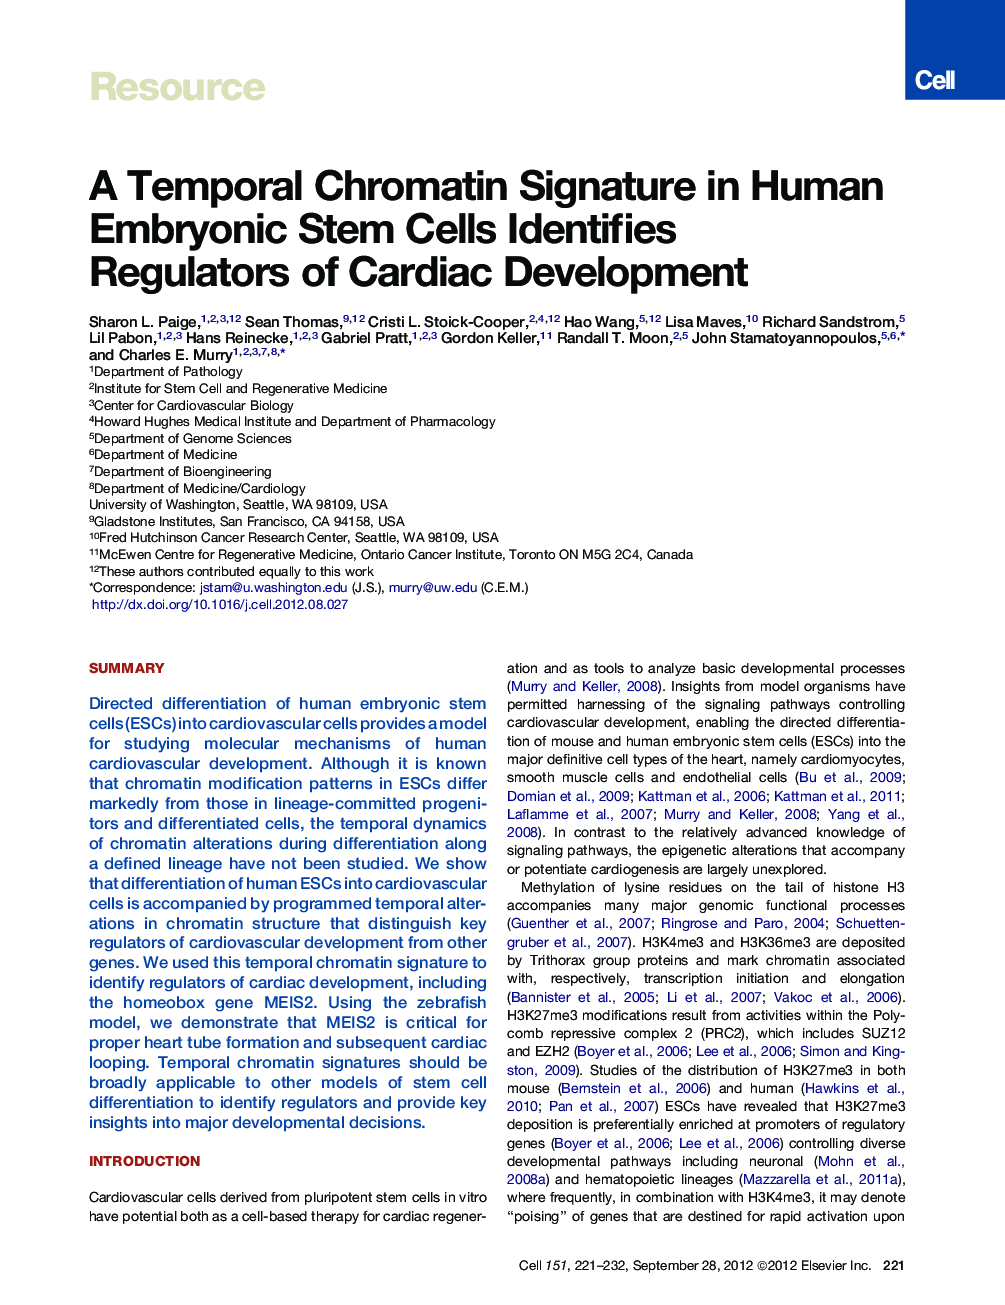 A Temporal Chromatin Signature in Human Embryonic Stem Cells Identifies Regulators of Cardiac Development